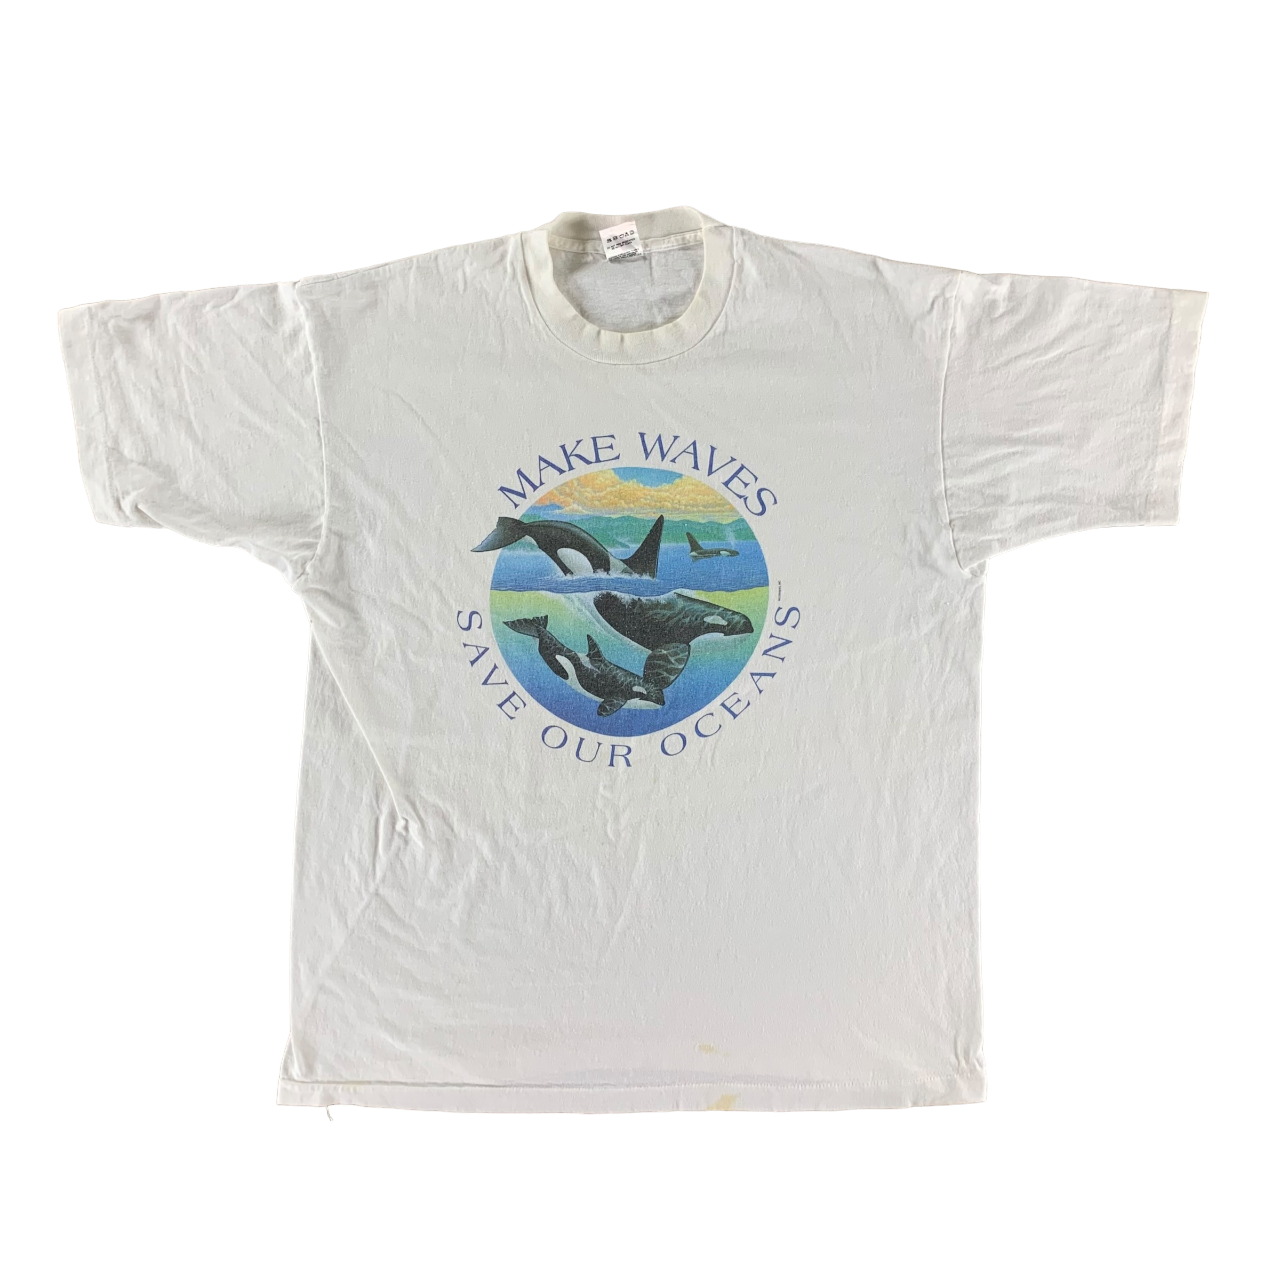 Vintage 1990s Save Our Oceans T-shirt size XL